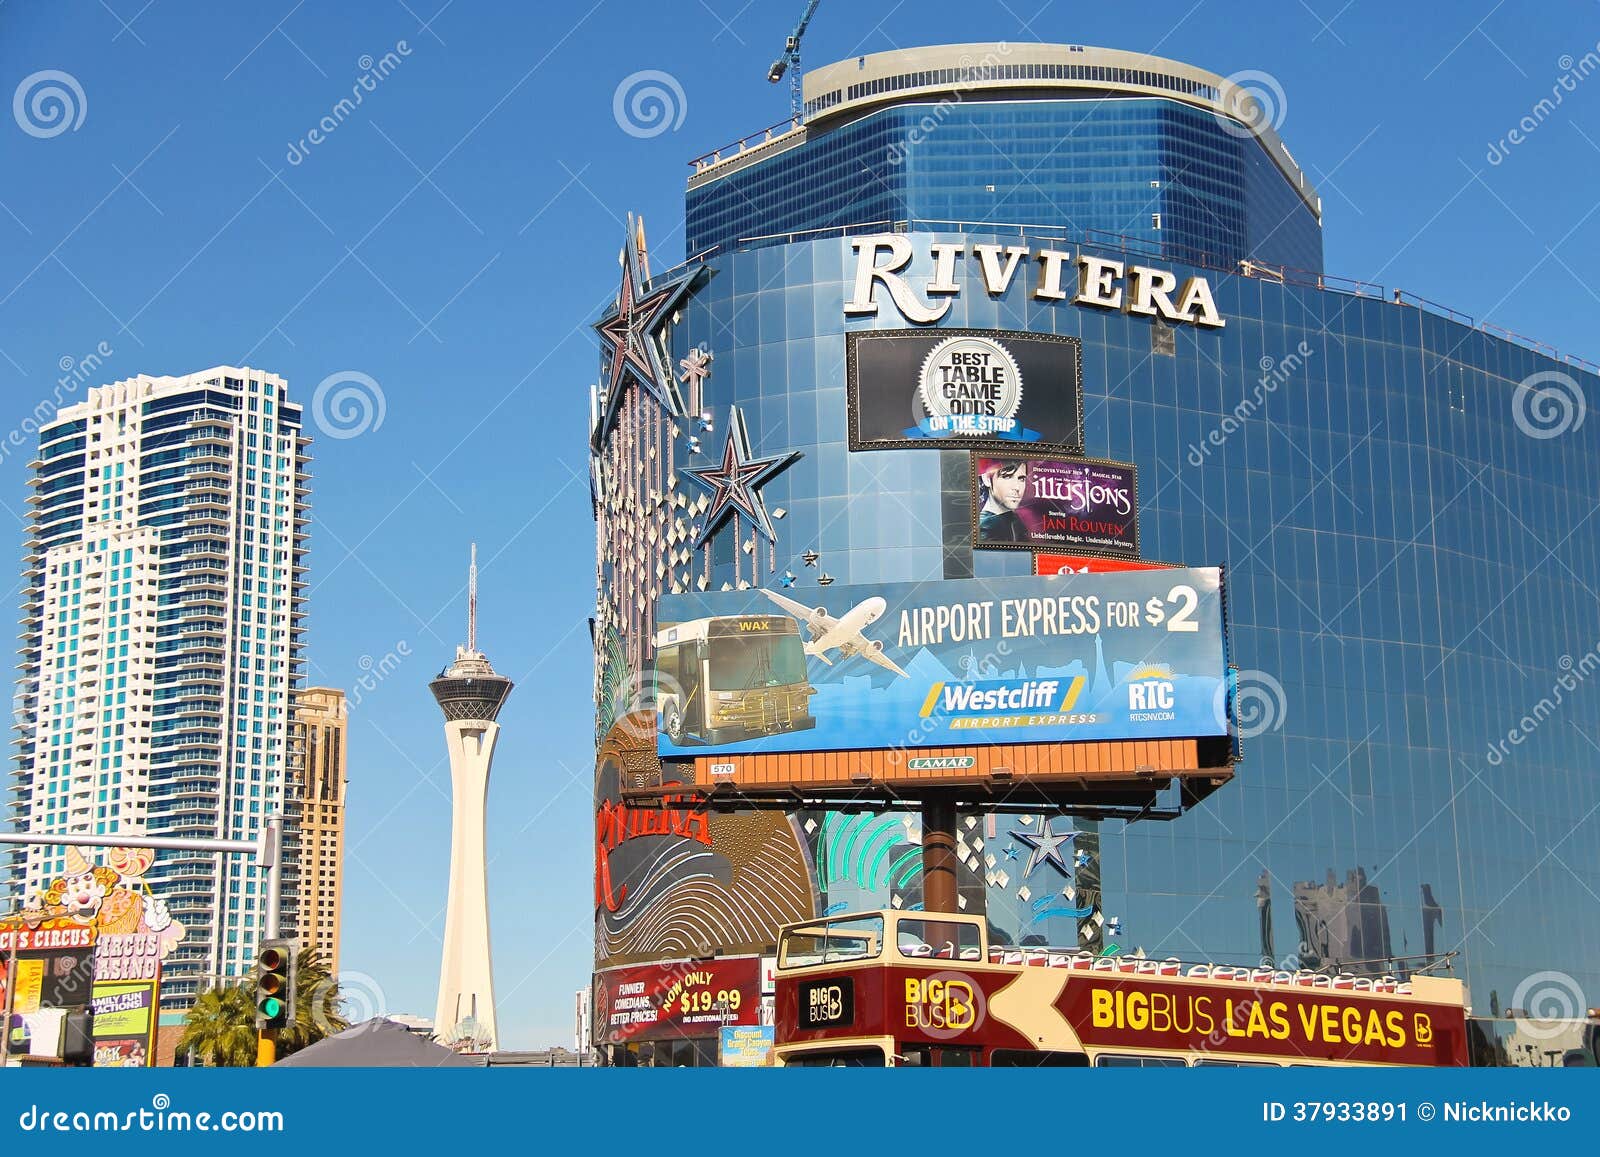 Riviera Hotel and Casino on The Strip, Las Vegas, Nevada, USA